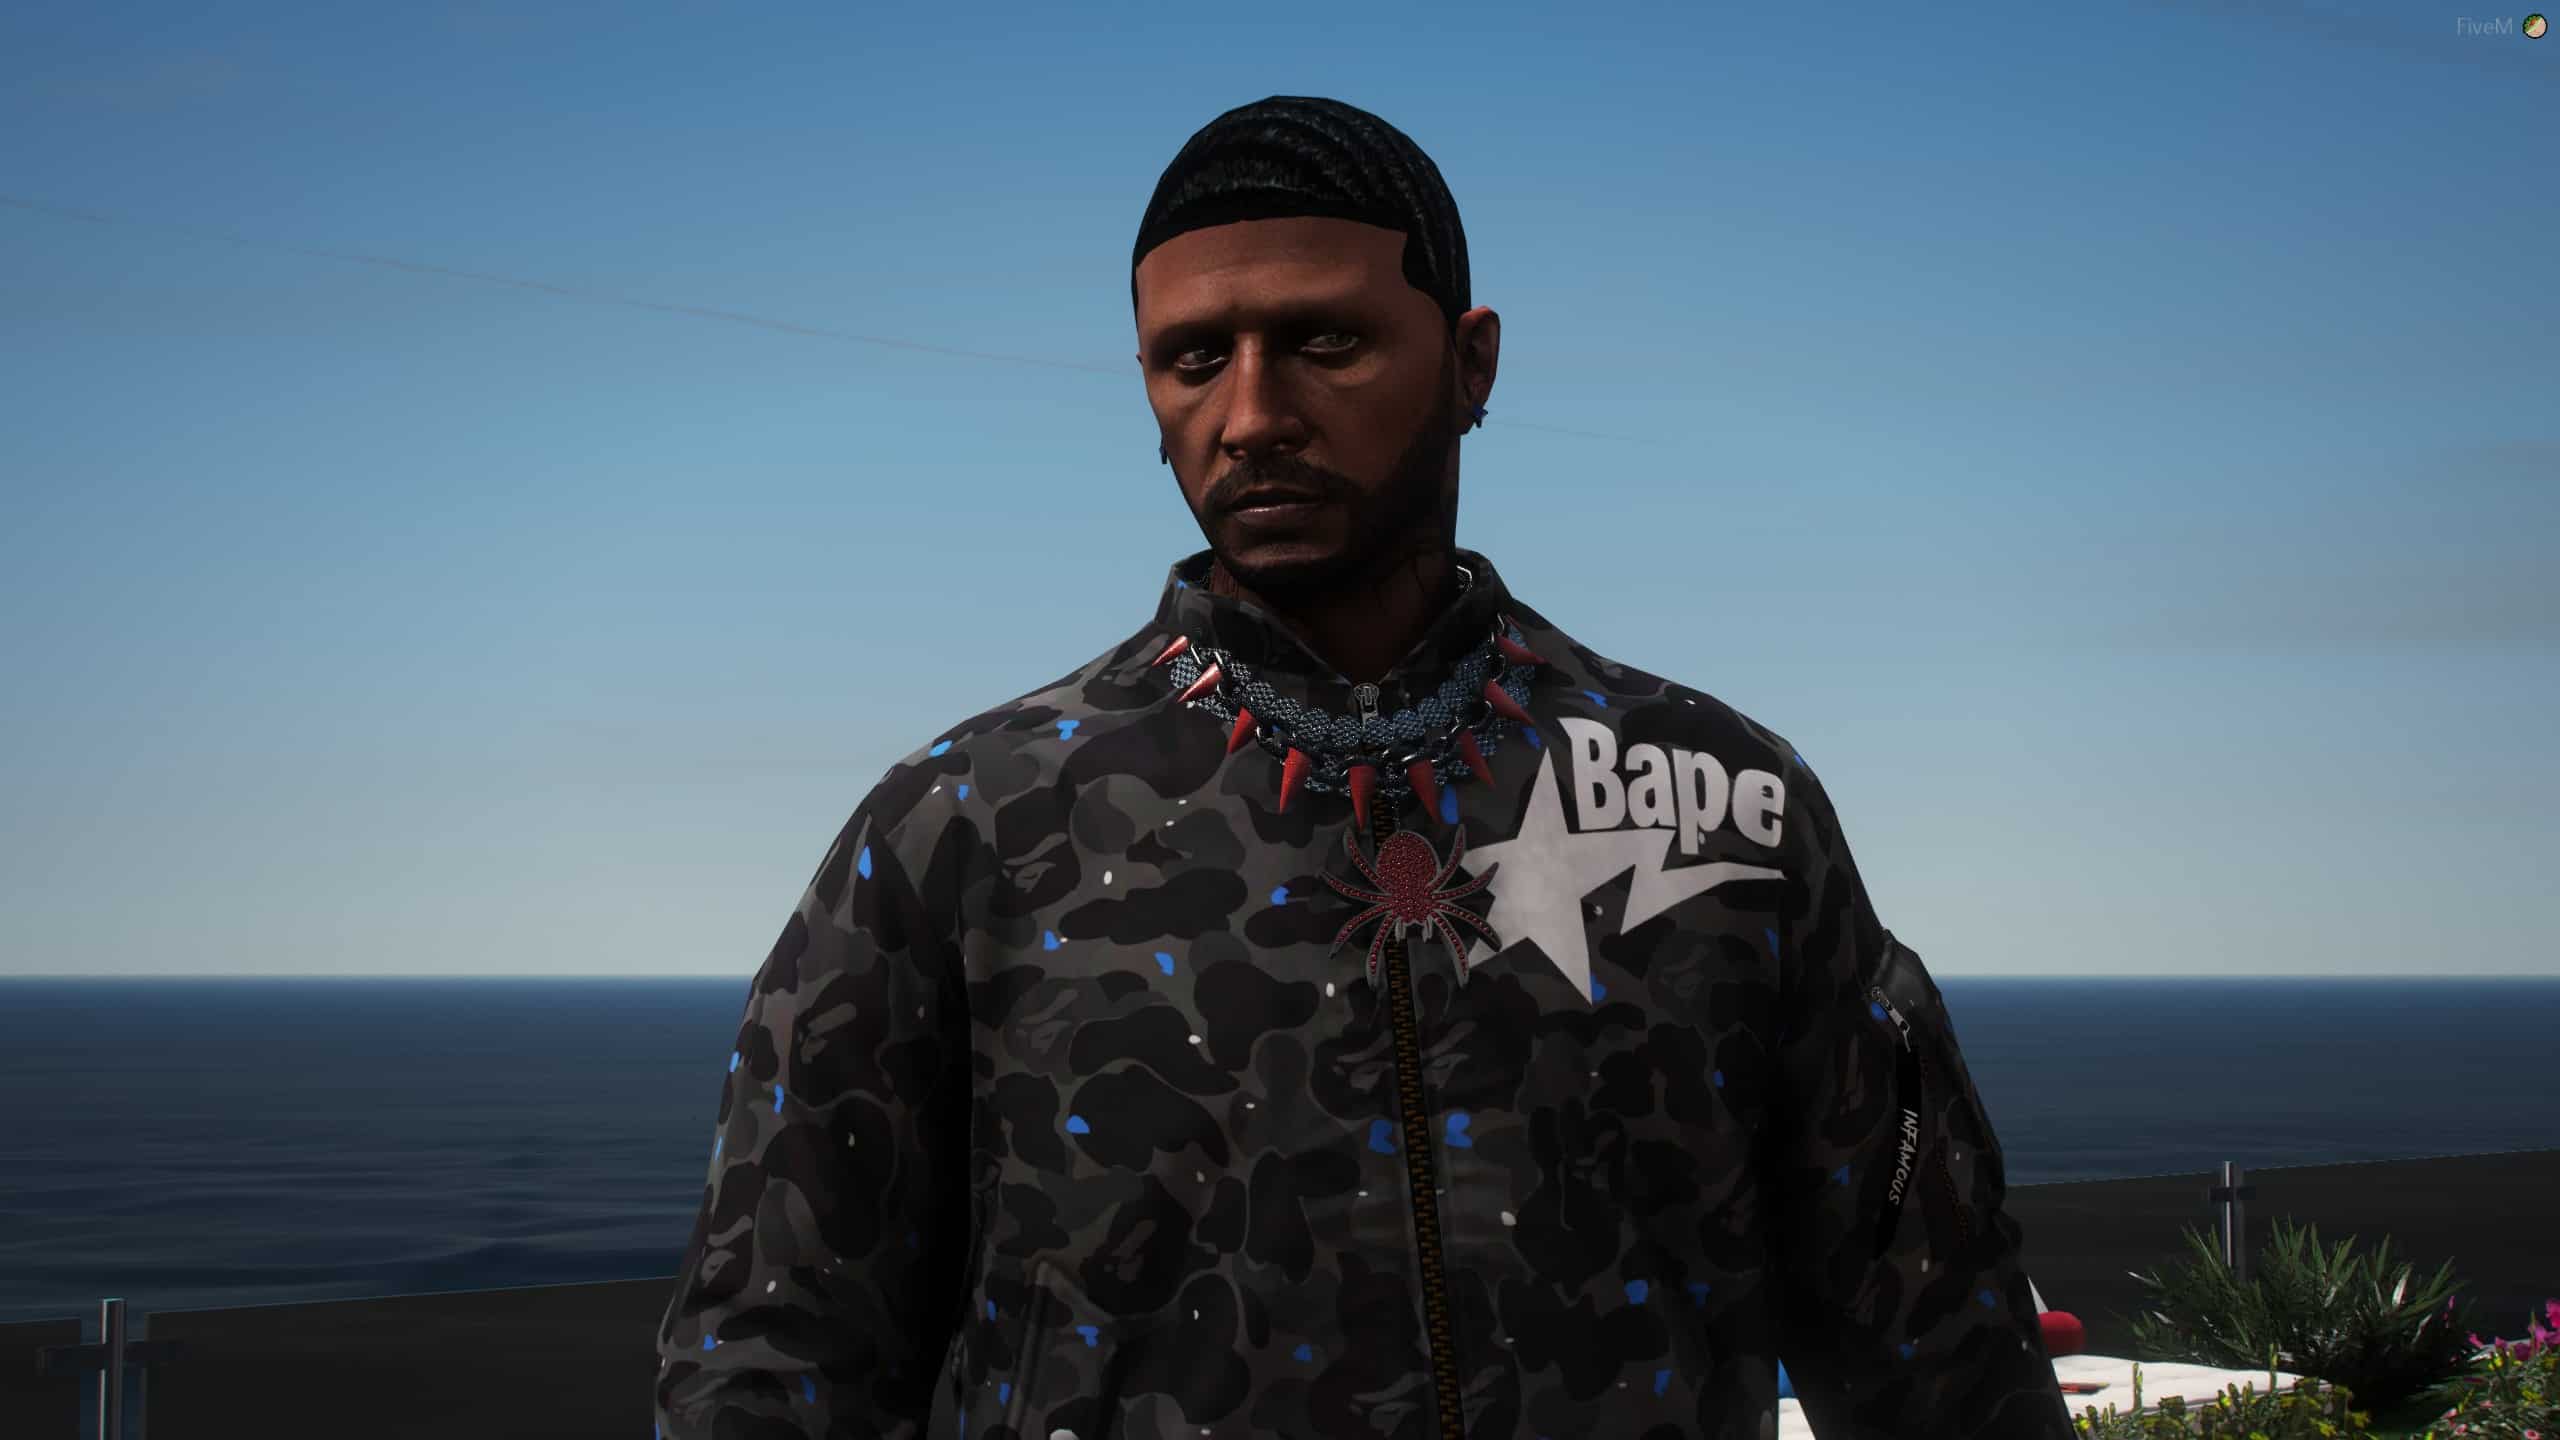 Space Camo bape bomber jacket (OPEN & CLOSED) - GTA 5 Mod | Grand Theft ...